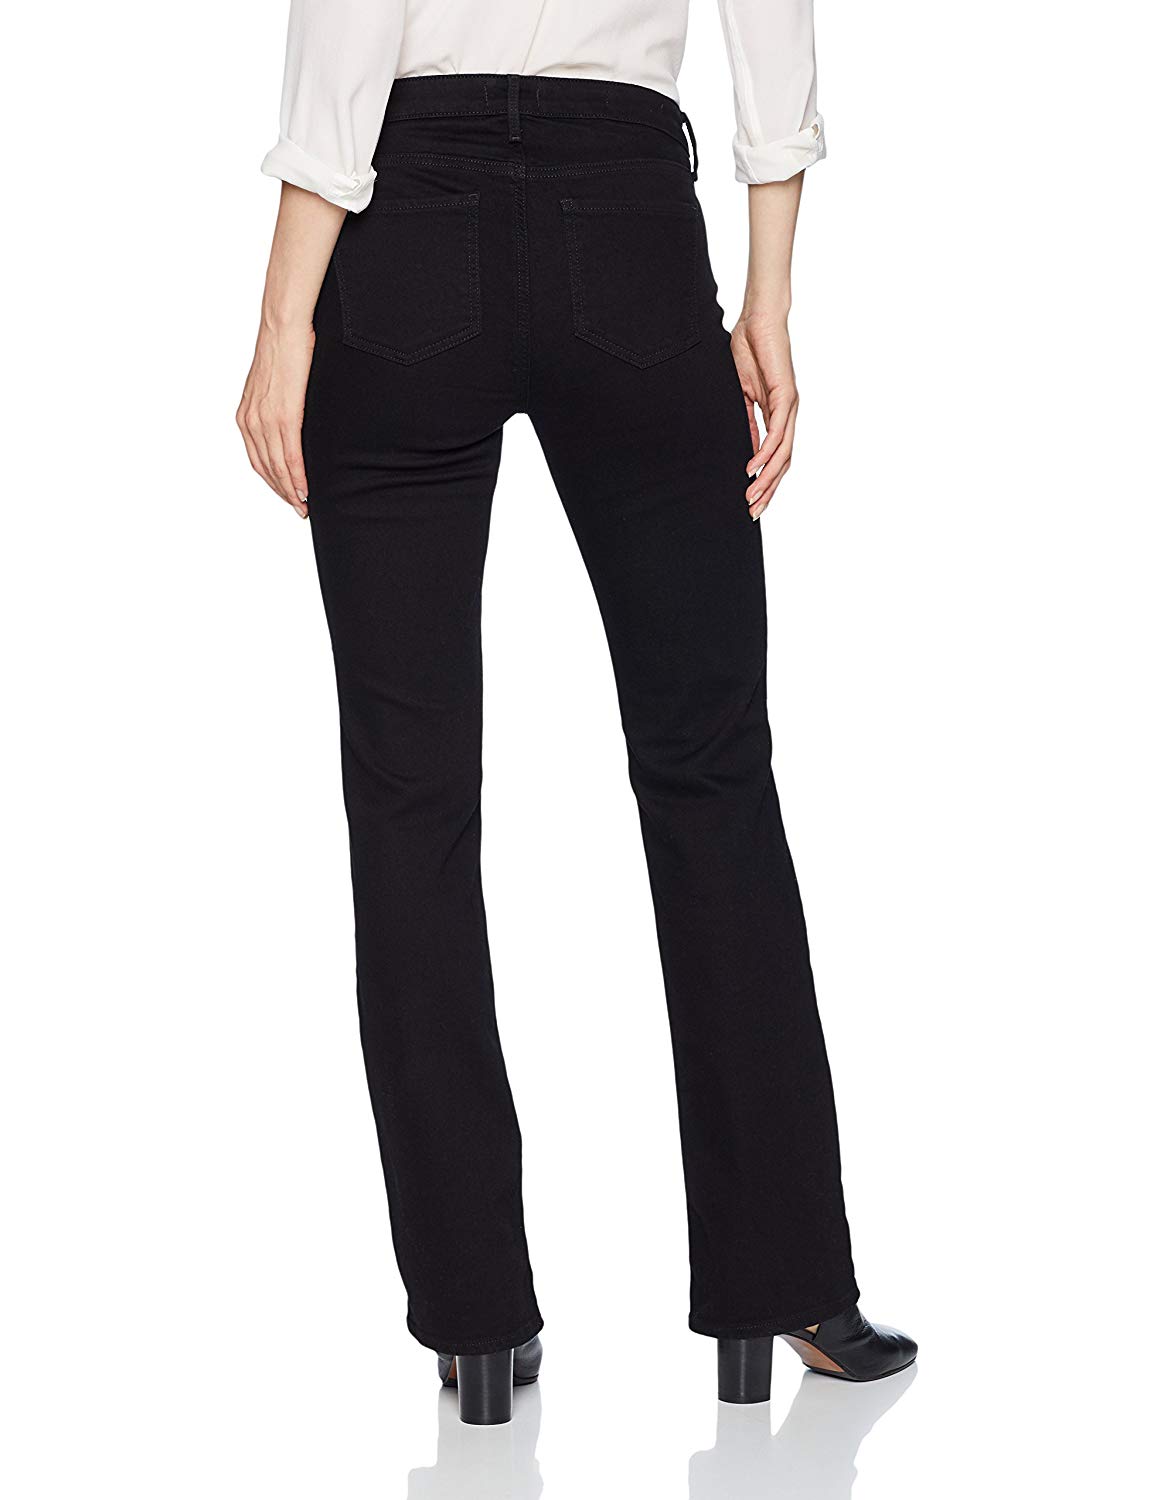 NYDJ Women's Barbara Bootcut Jeans, New Black, 14, New Black, Size 14.0 ...